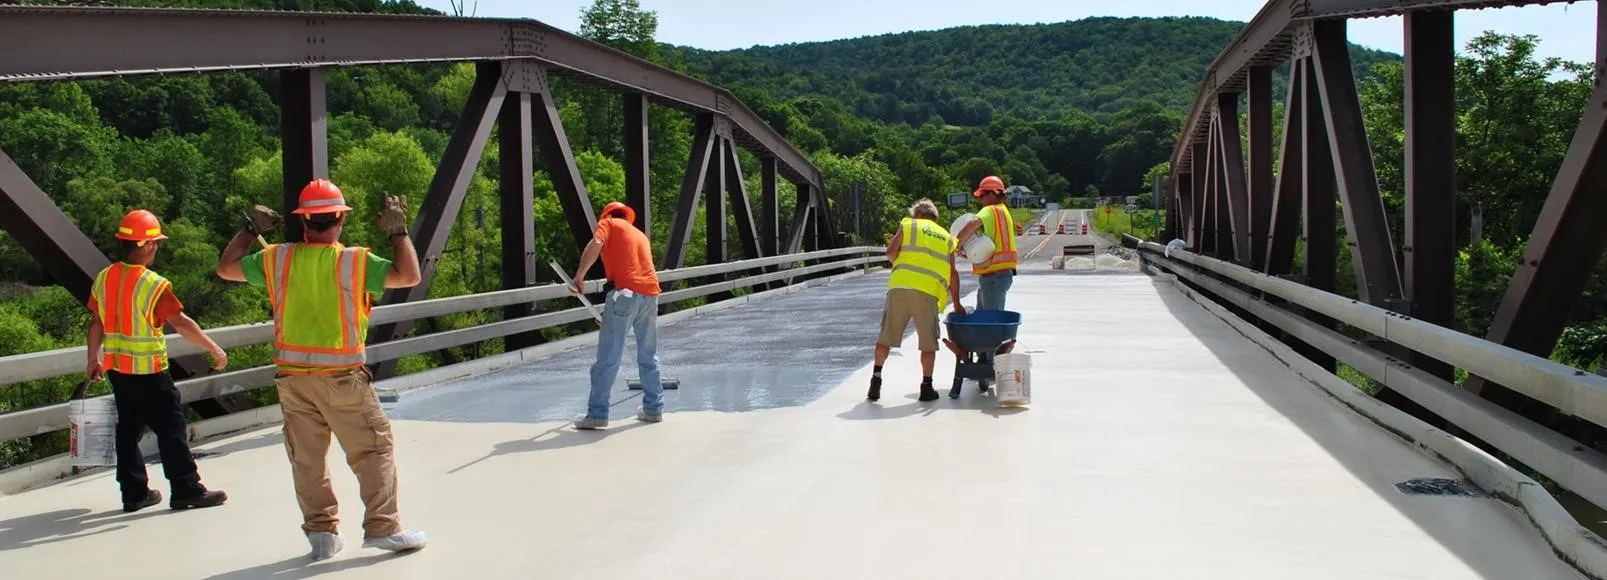 Products
Seamless Bridge Deck Waterproofing Under Asphalt